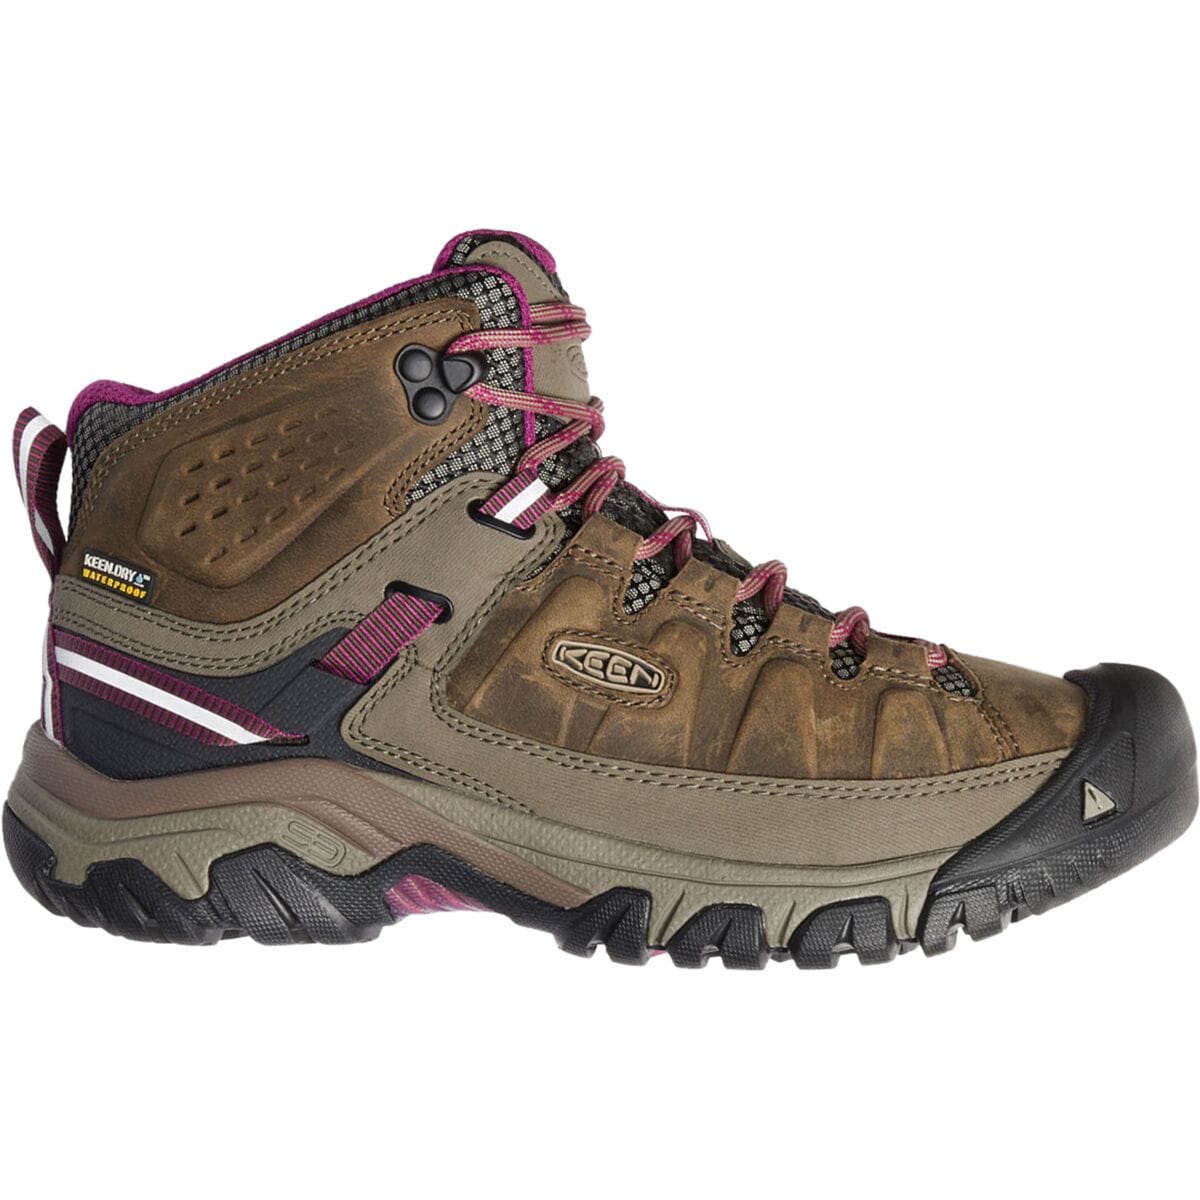 Targhee III Mid Waterproof Hiking Boot - Women